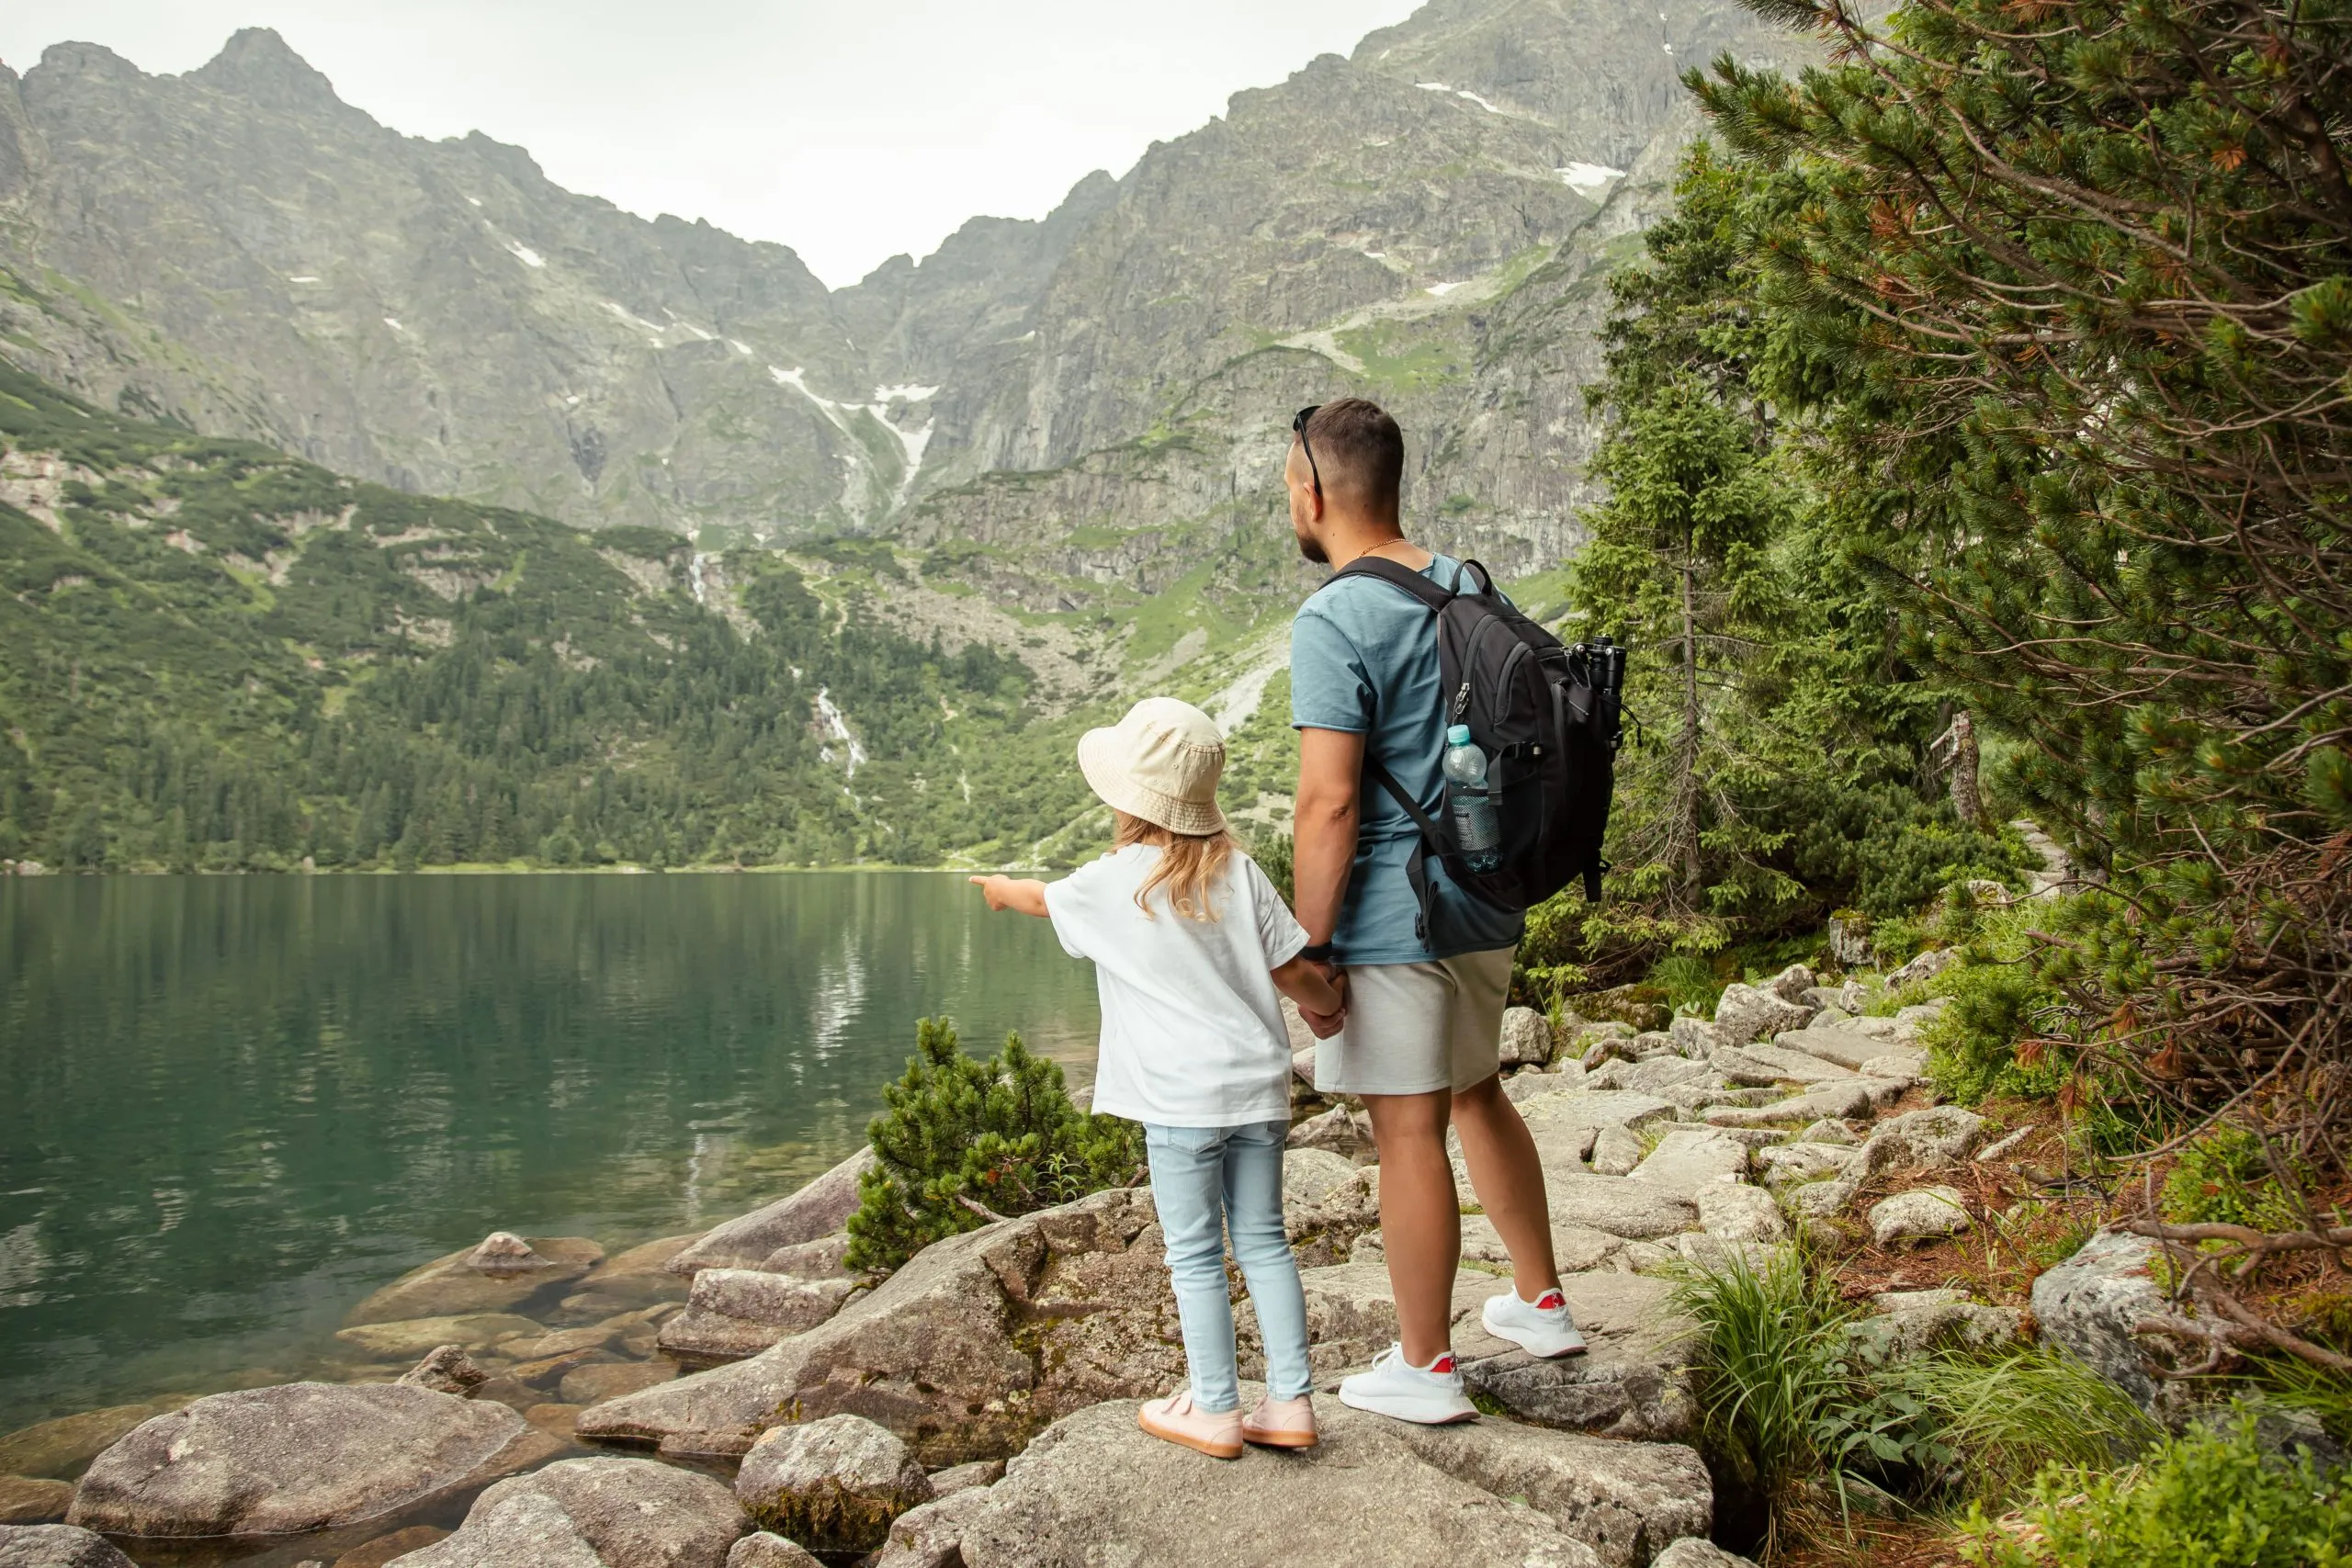 Mand og barn turister i bjergene ved Morskie Oko-søen nær Zakopane, Tatra-bjergene, Polen. Koncept for familierejser.